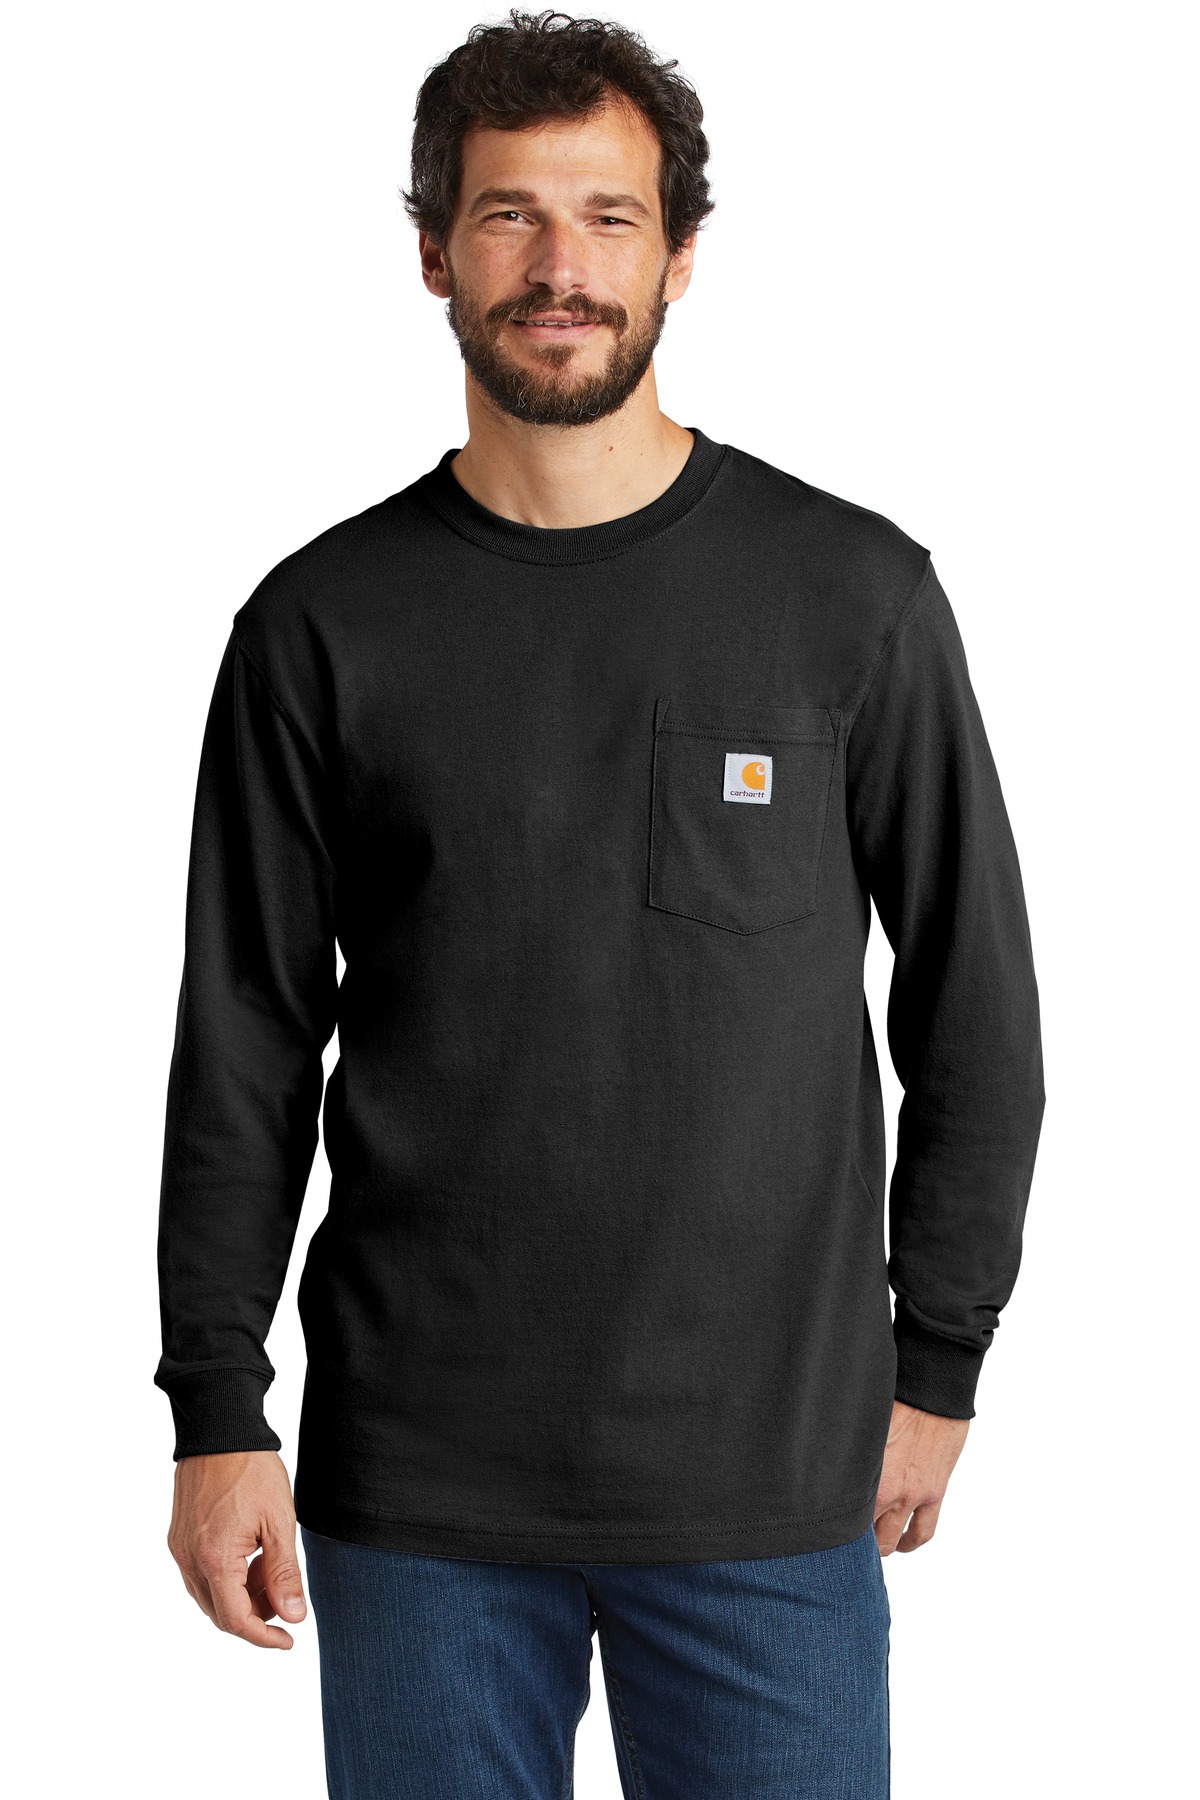 Carhartt Workwear Pocket Long Sleeve T-Shirt-Carhartt